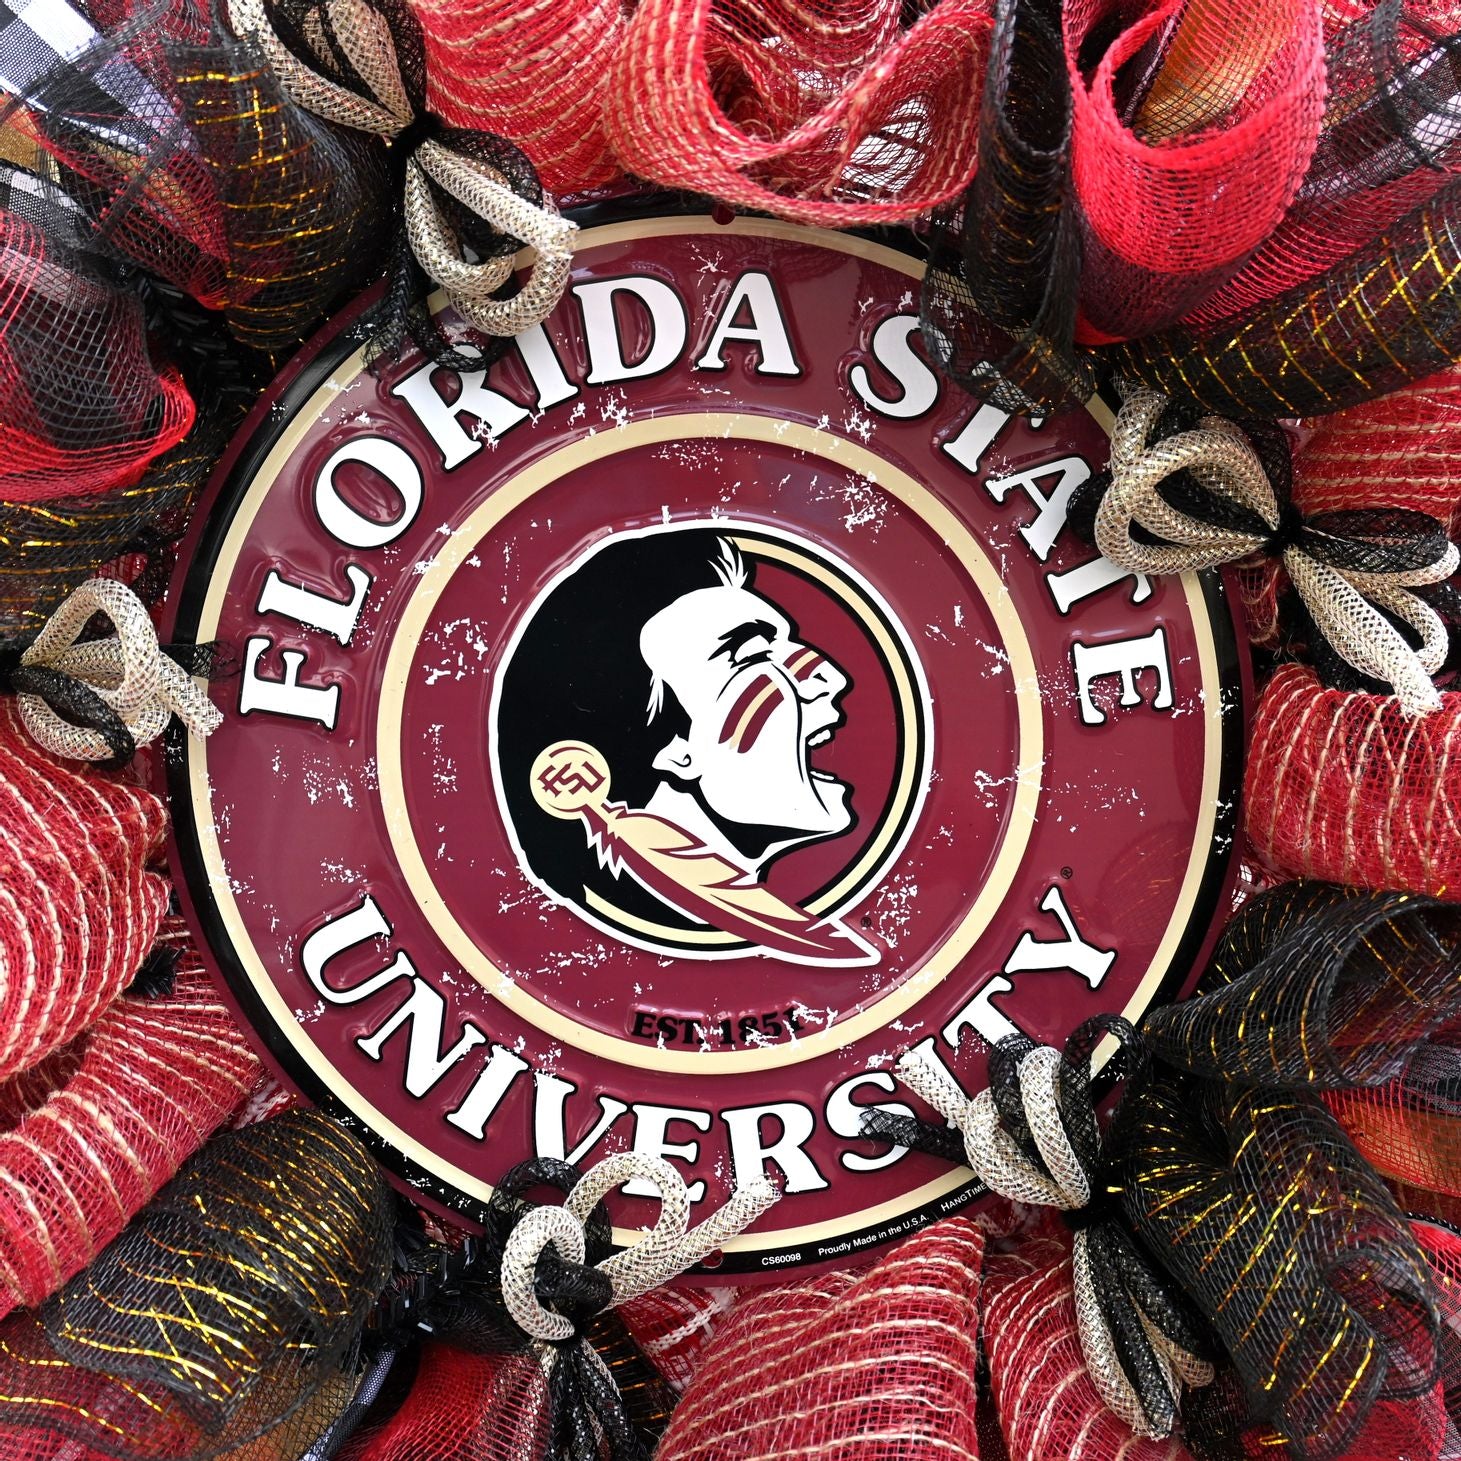 24" Seminoles Wreath – Florida State Wreath – FSU Wreath - Stunning College Wreath